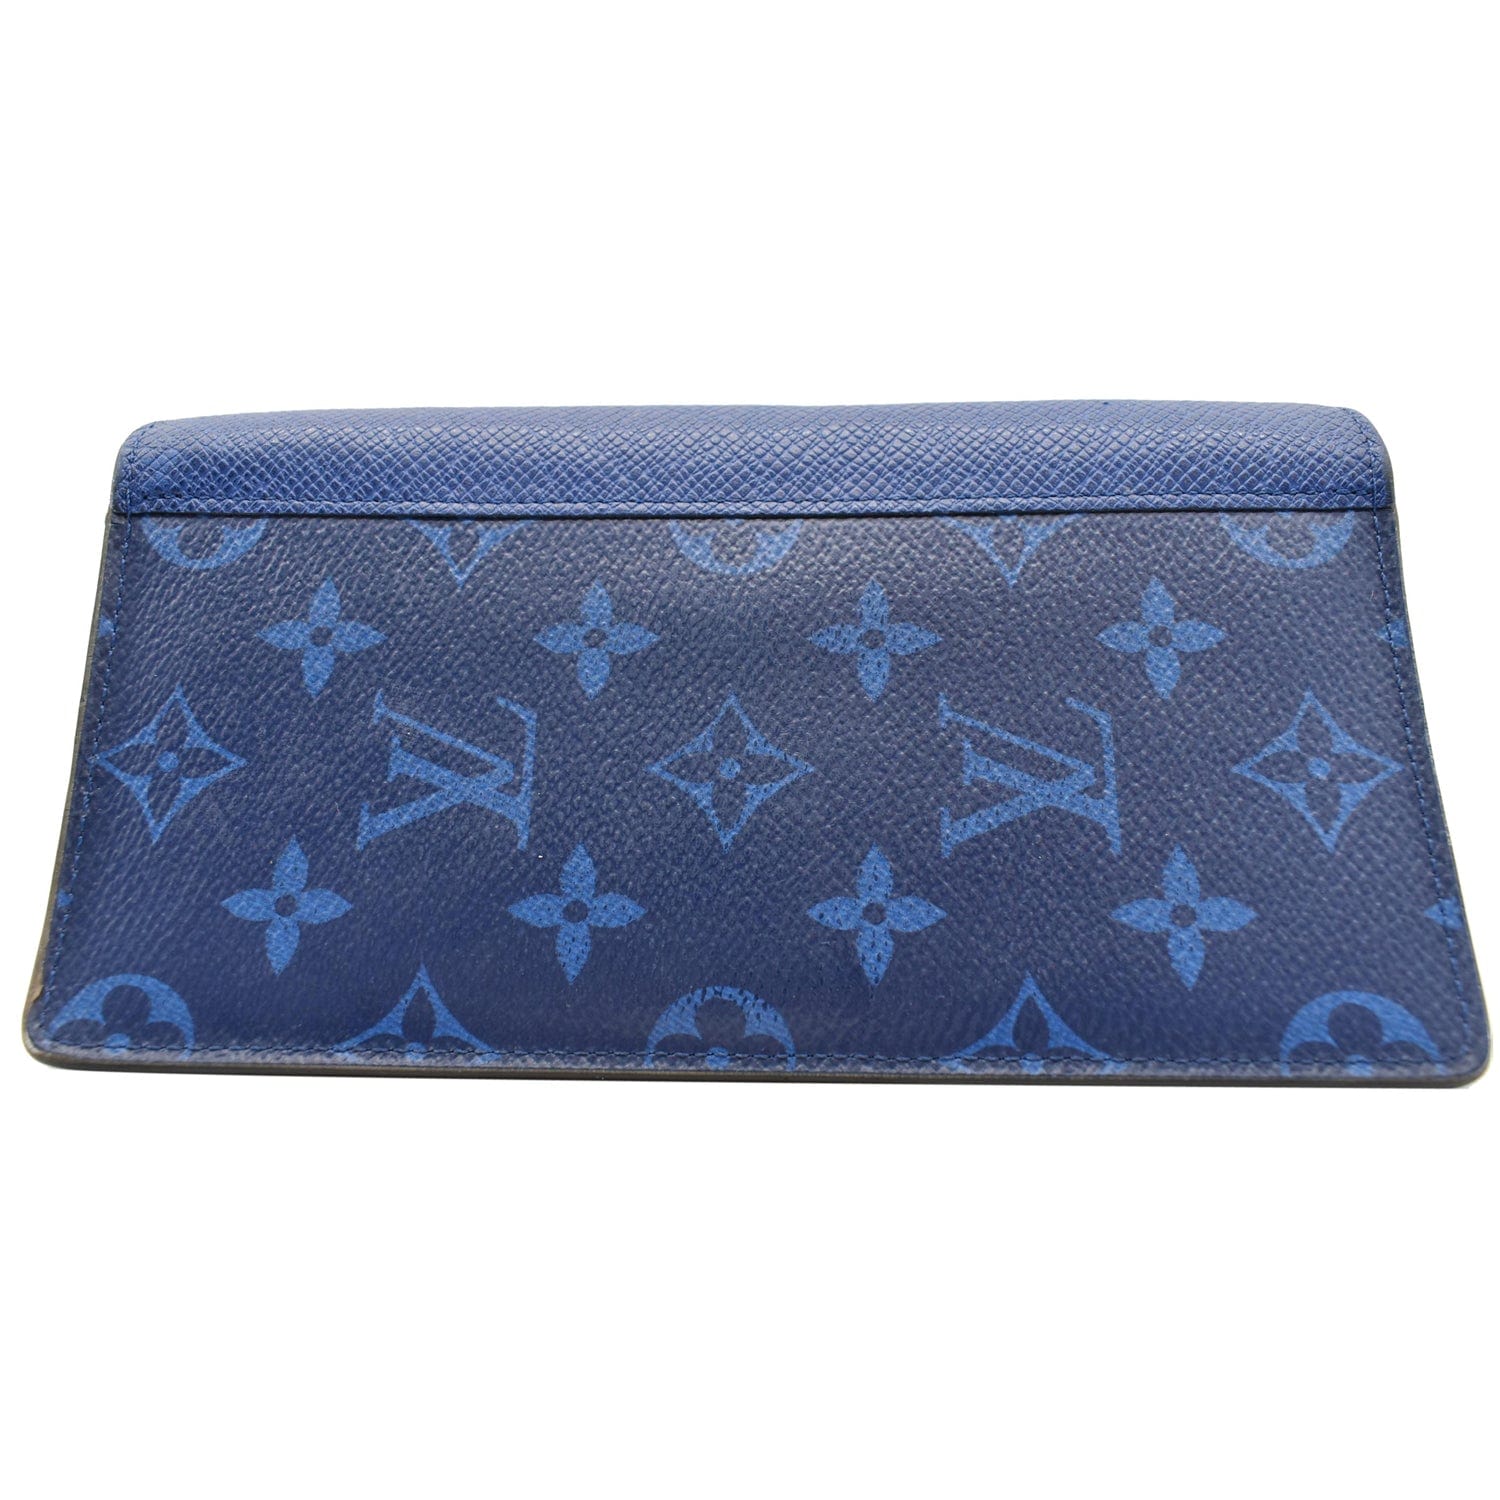 lv wallet blue